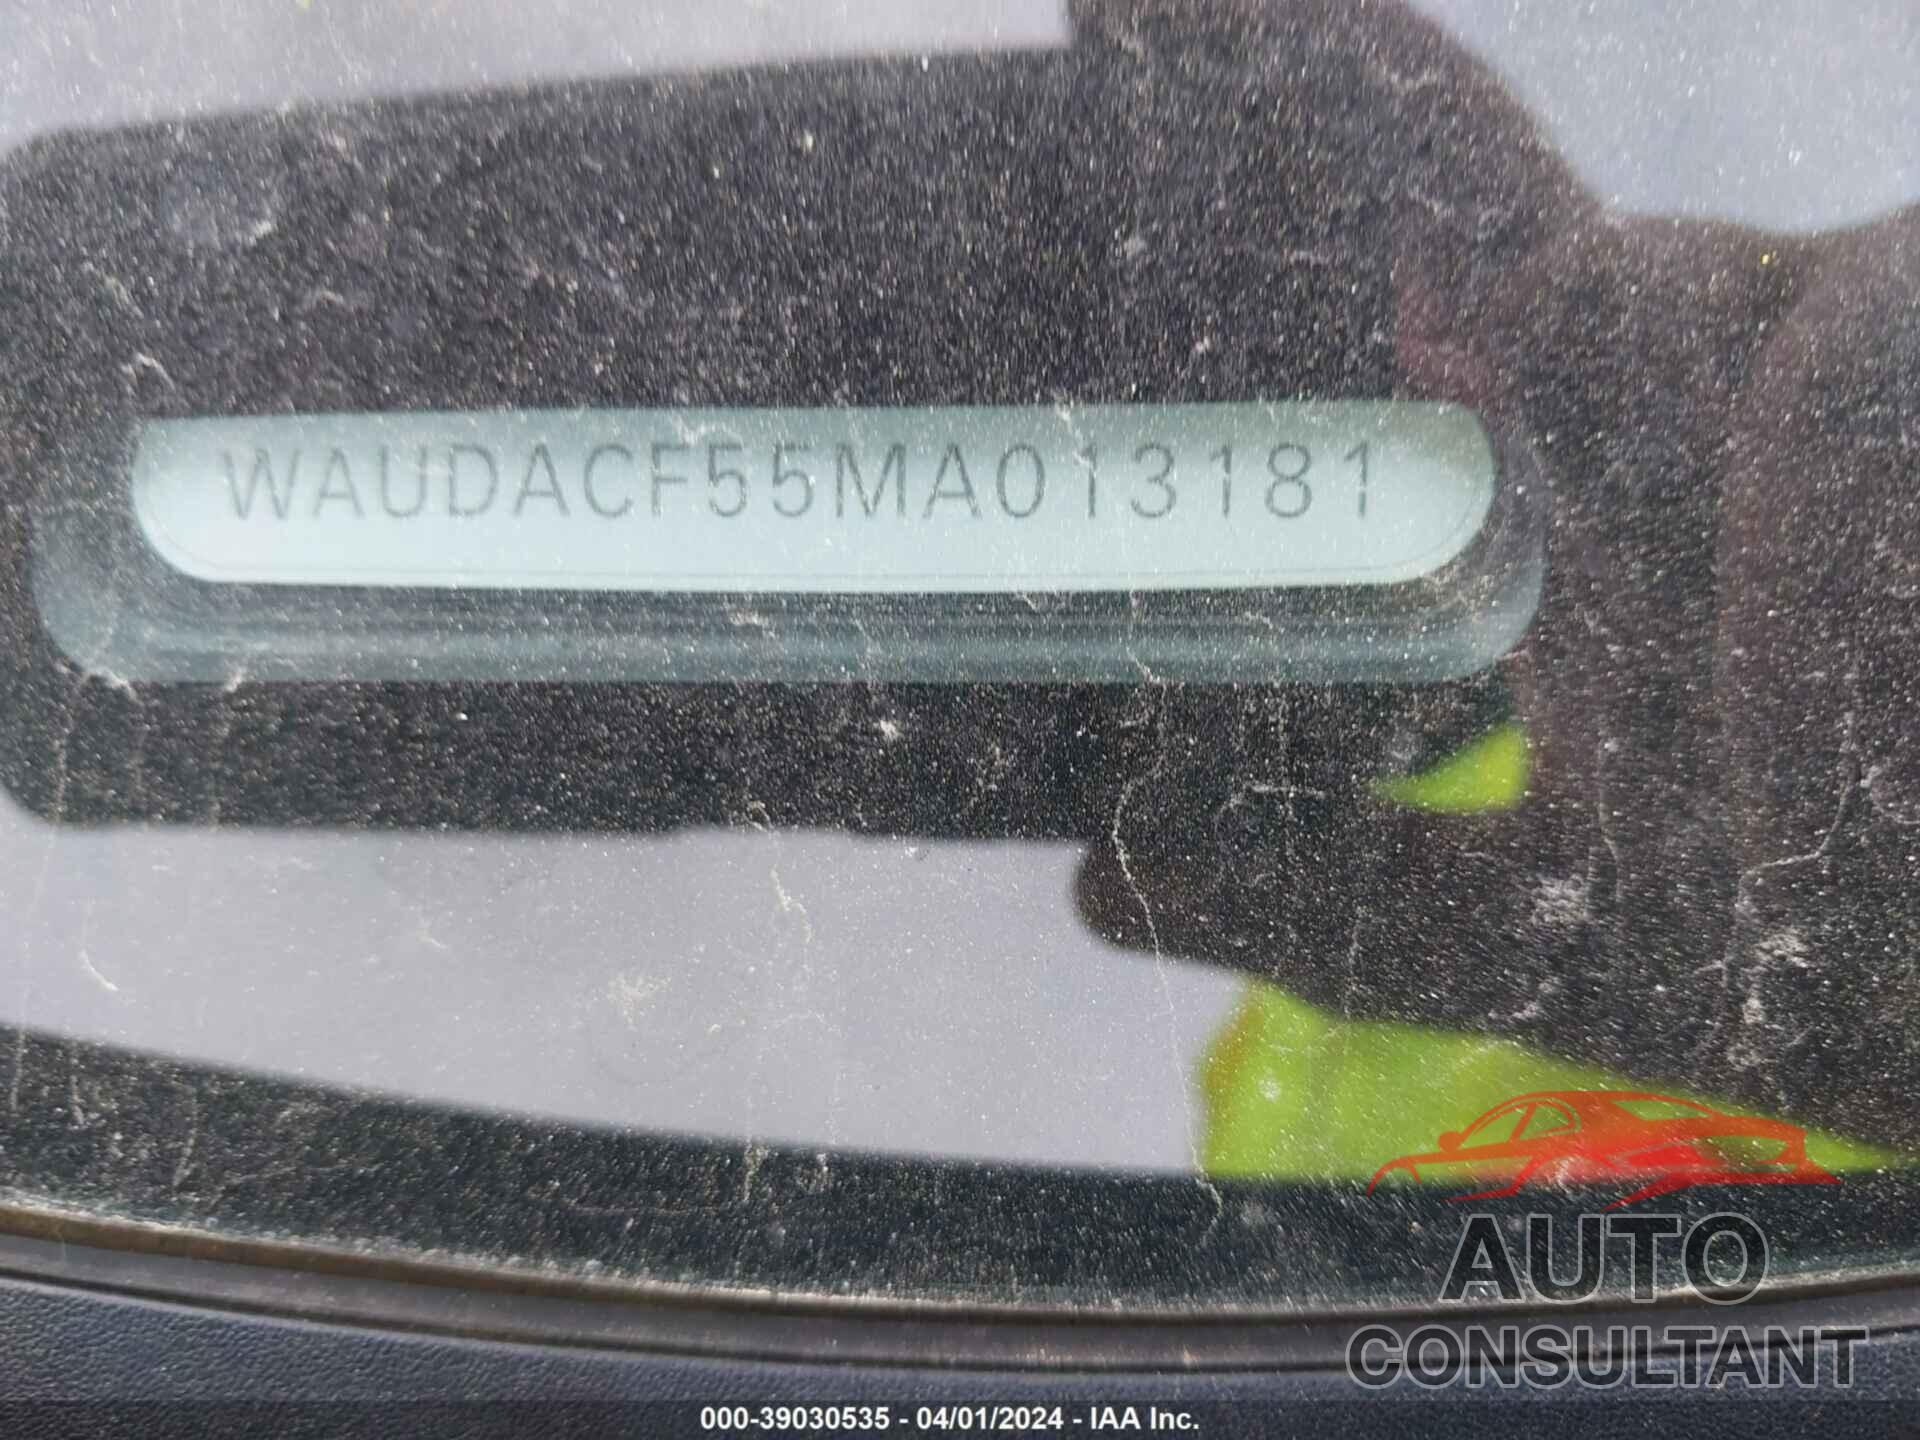 AUDI A5 SPORTBACK 2021 - WAUDACF55MA013181